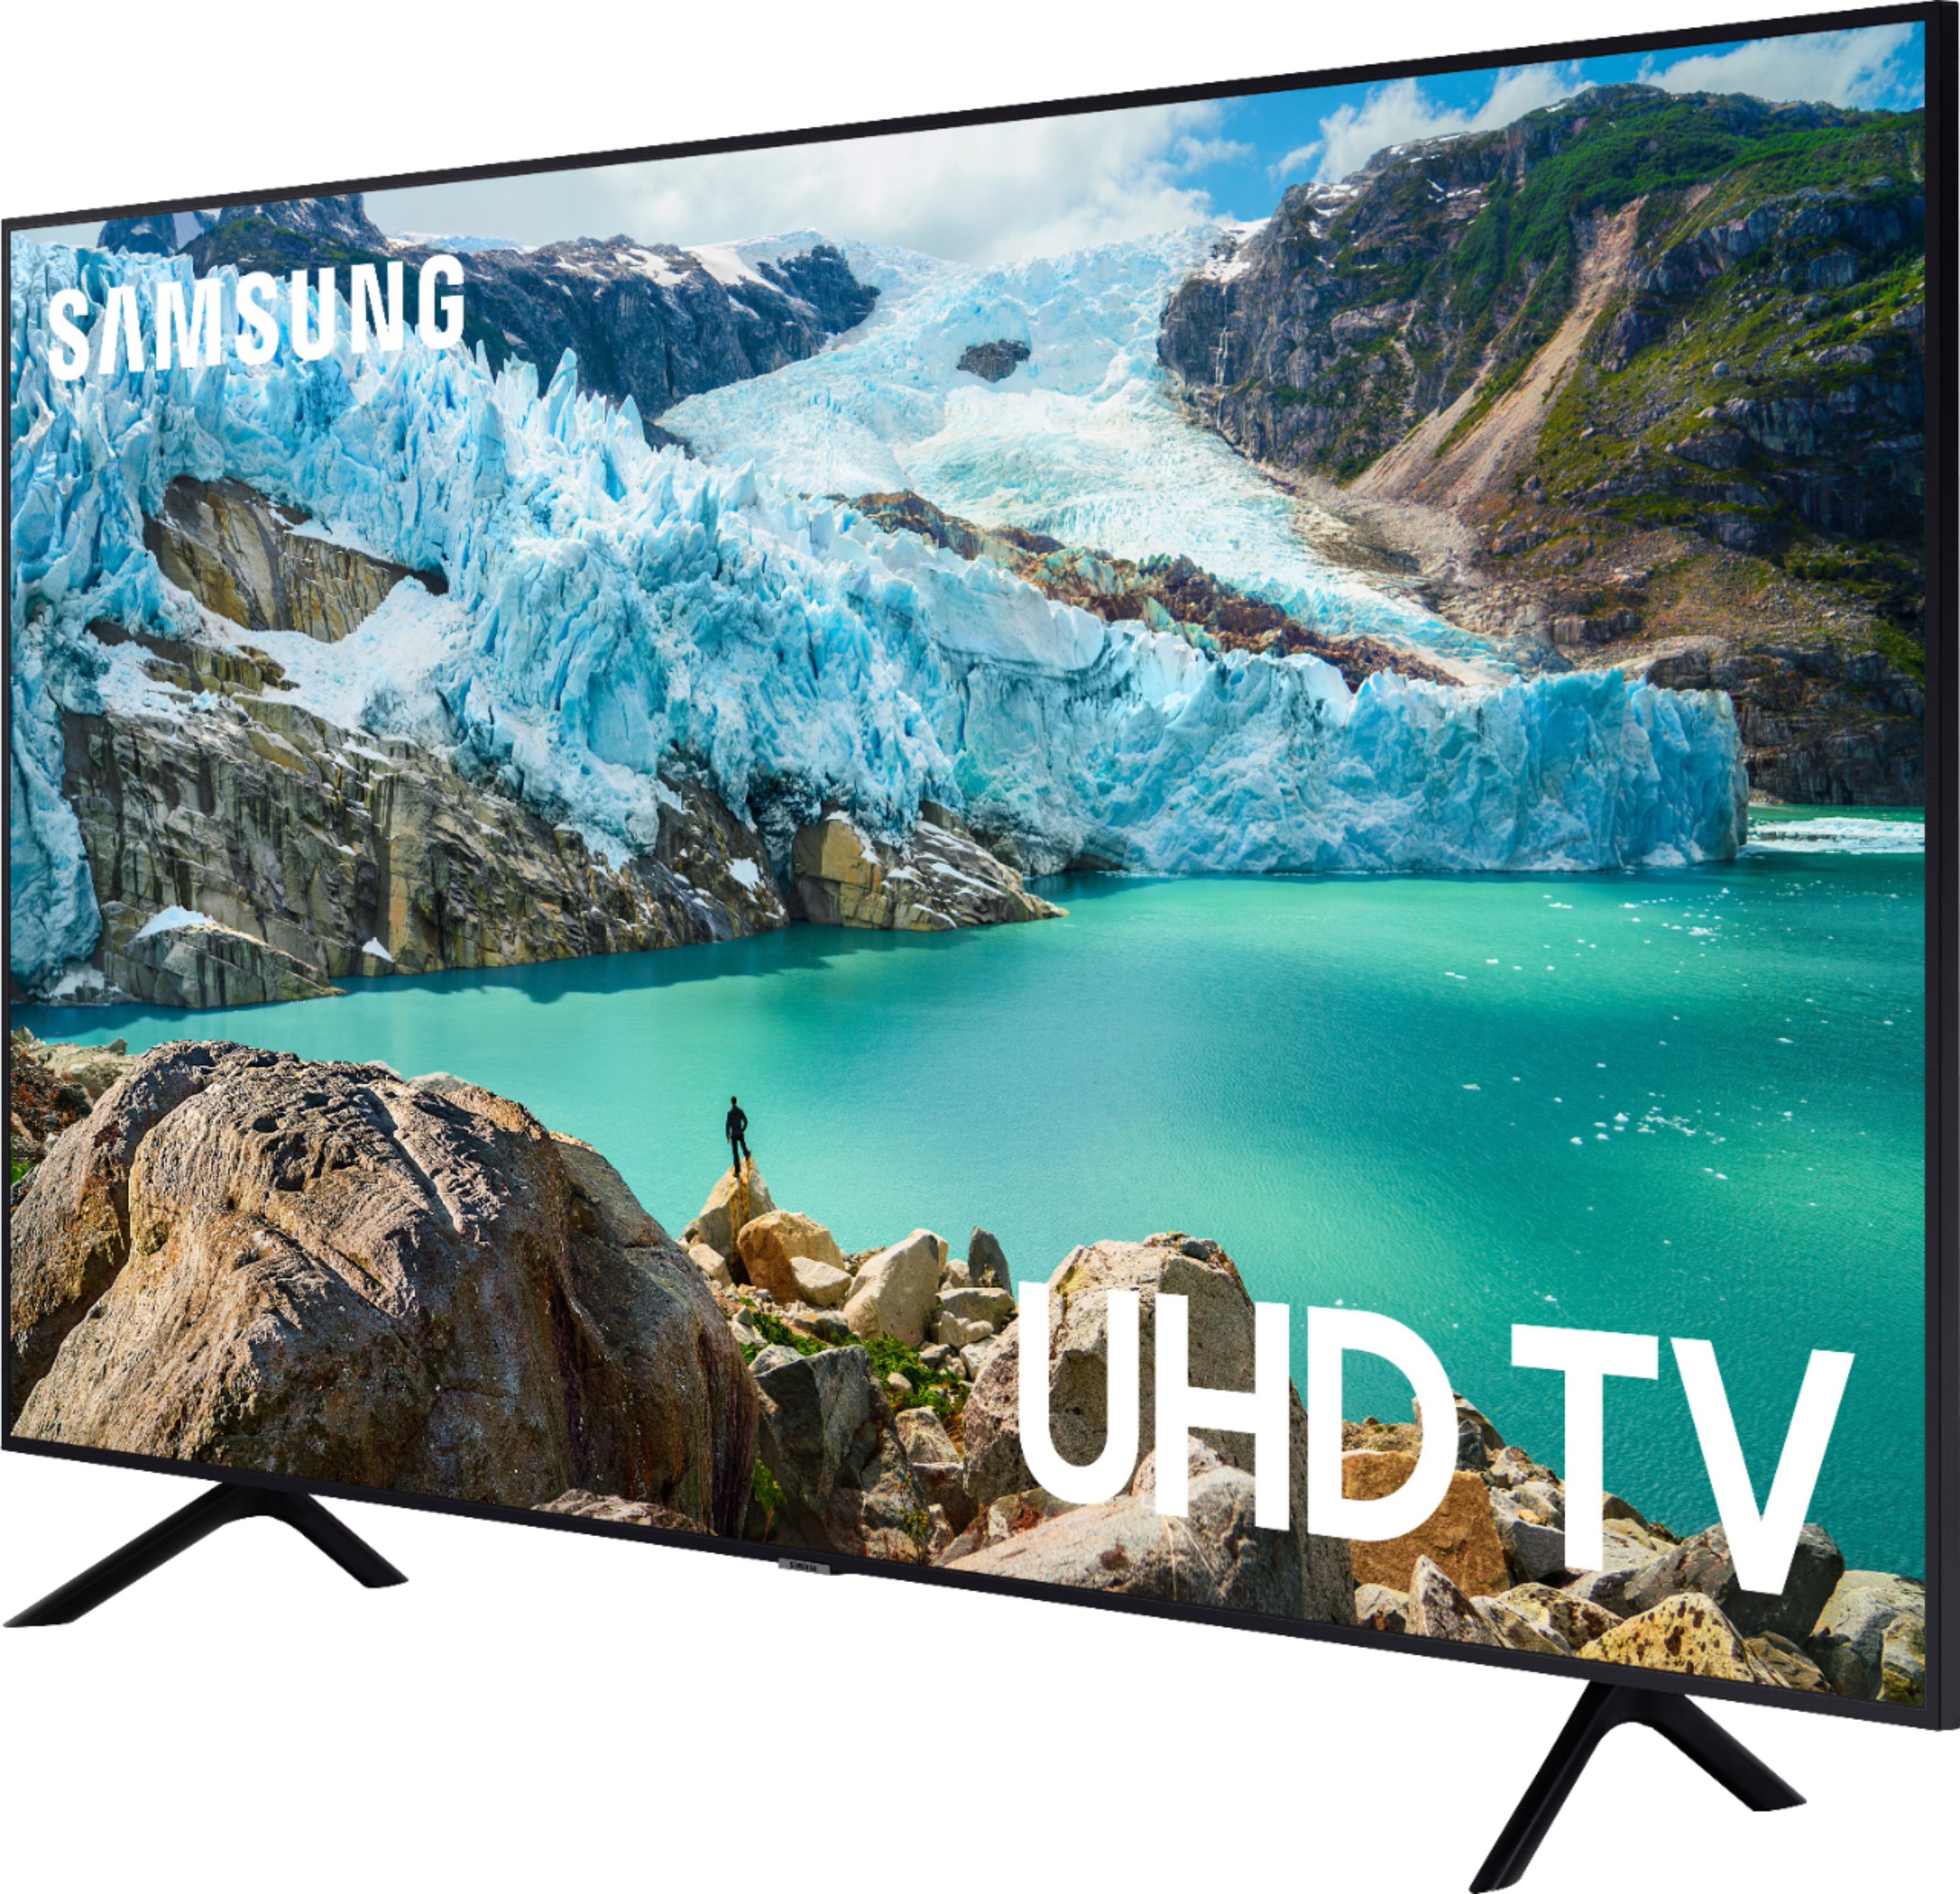 Best Buy: Samsung 70" Class 6 Series LED 4K UHD Tizen TV UN70NU6900FXZA